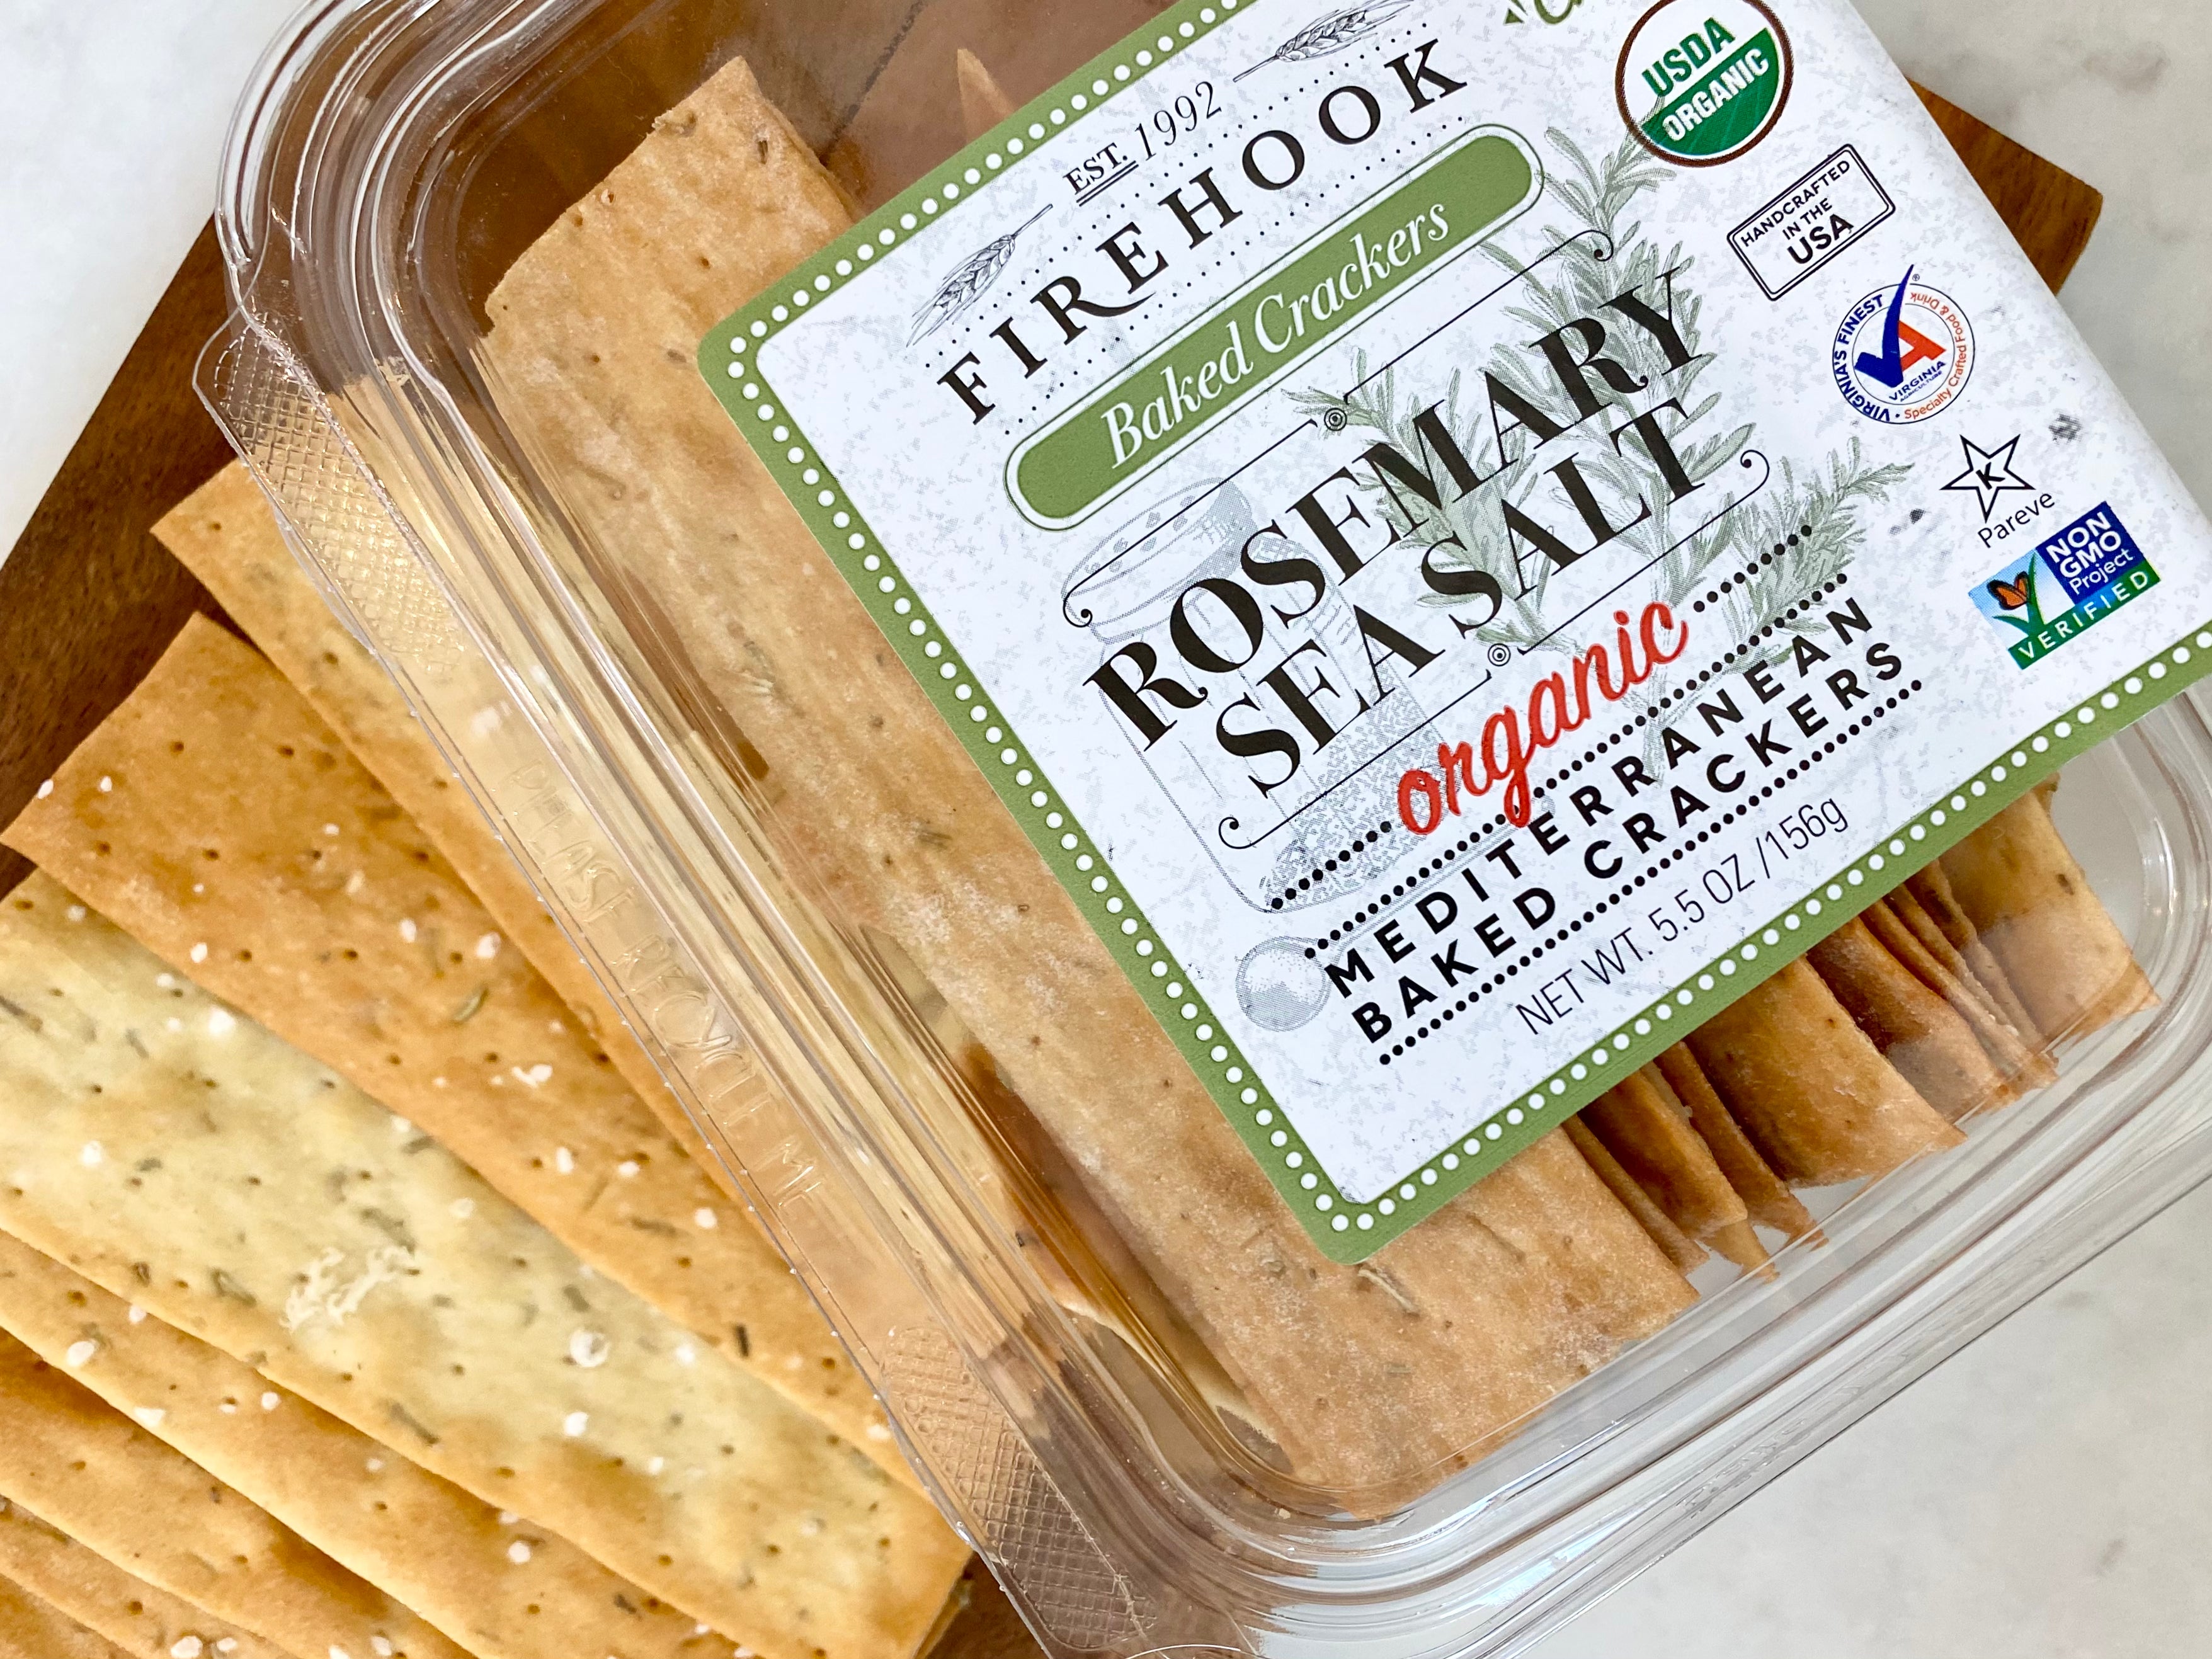 Firehook Mediterranean Baked Crackers - Rosemary Sea Salt